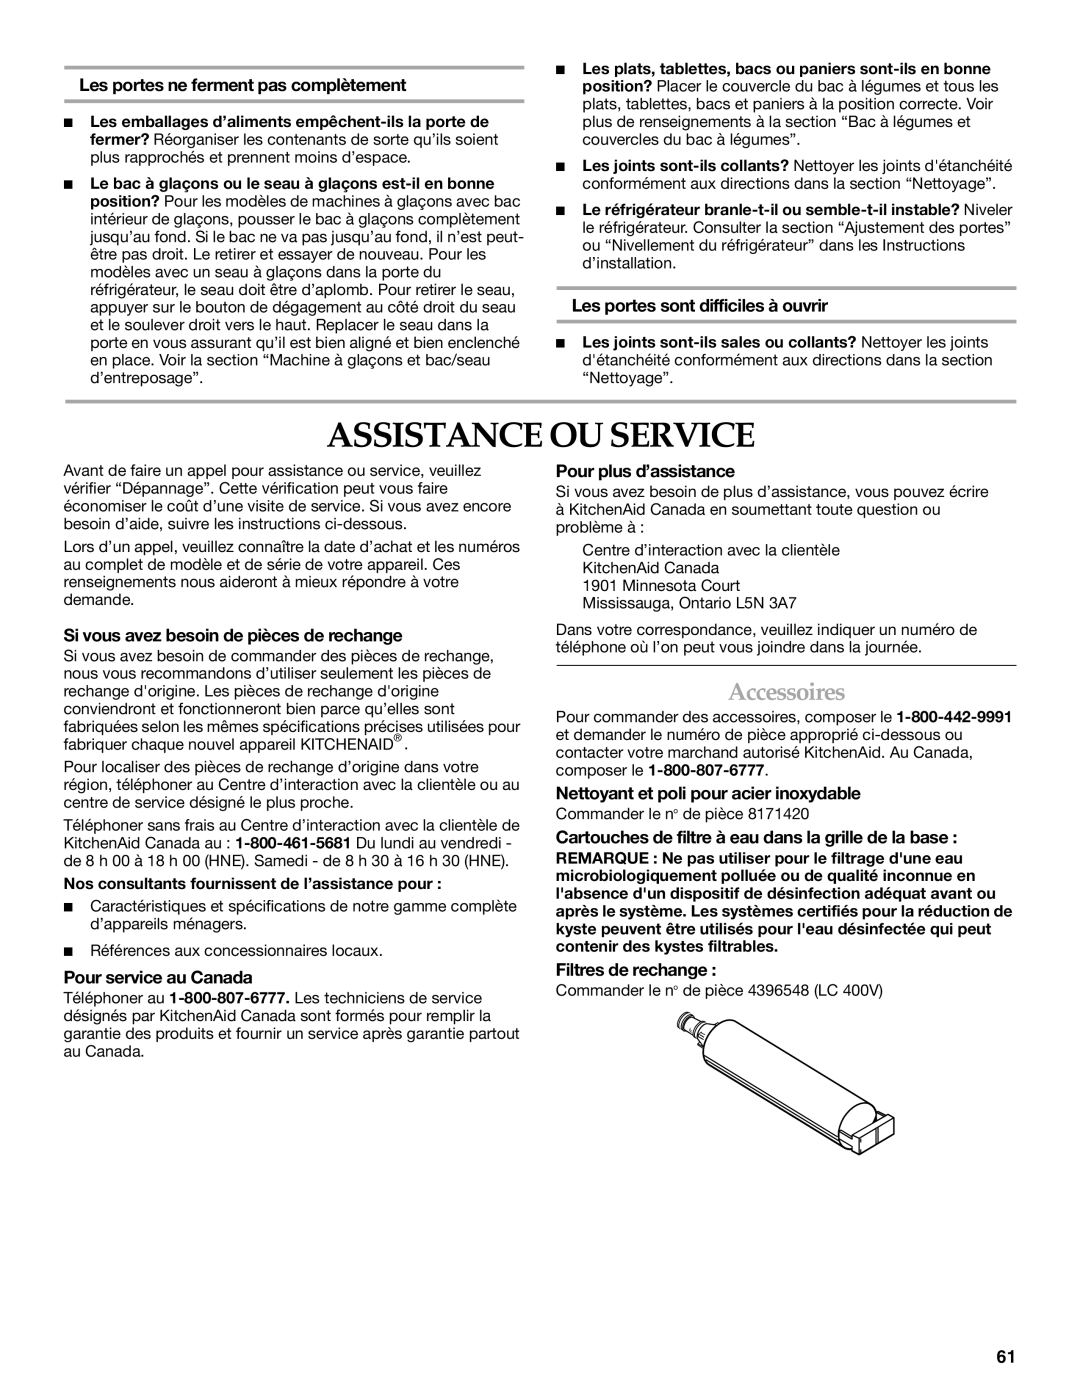 KitchenAid BUILT-IN REFRIGERATOR manual Assistance OU Service, Accessoires 